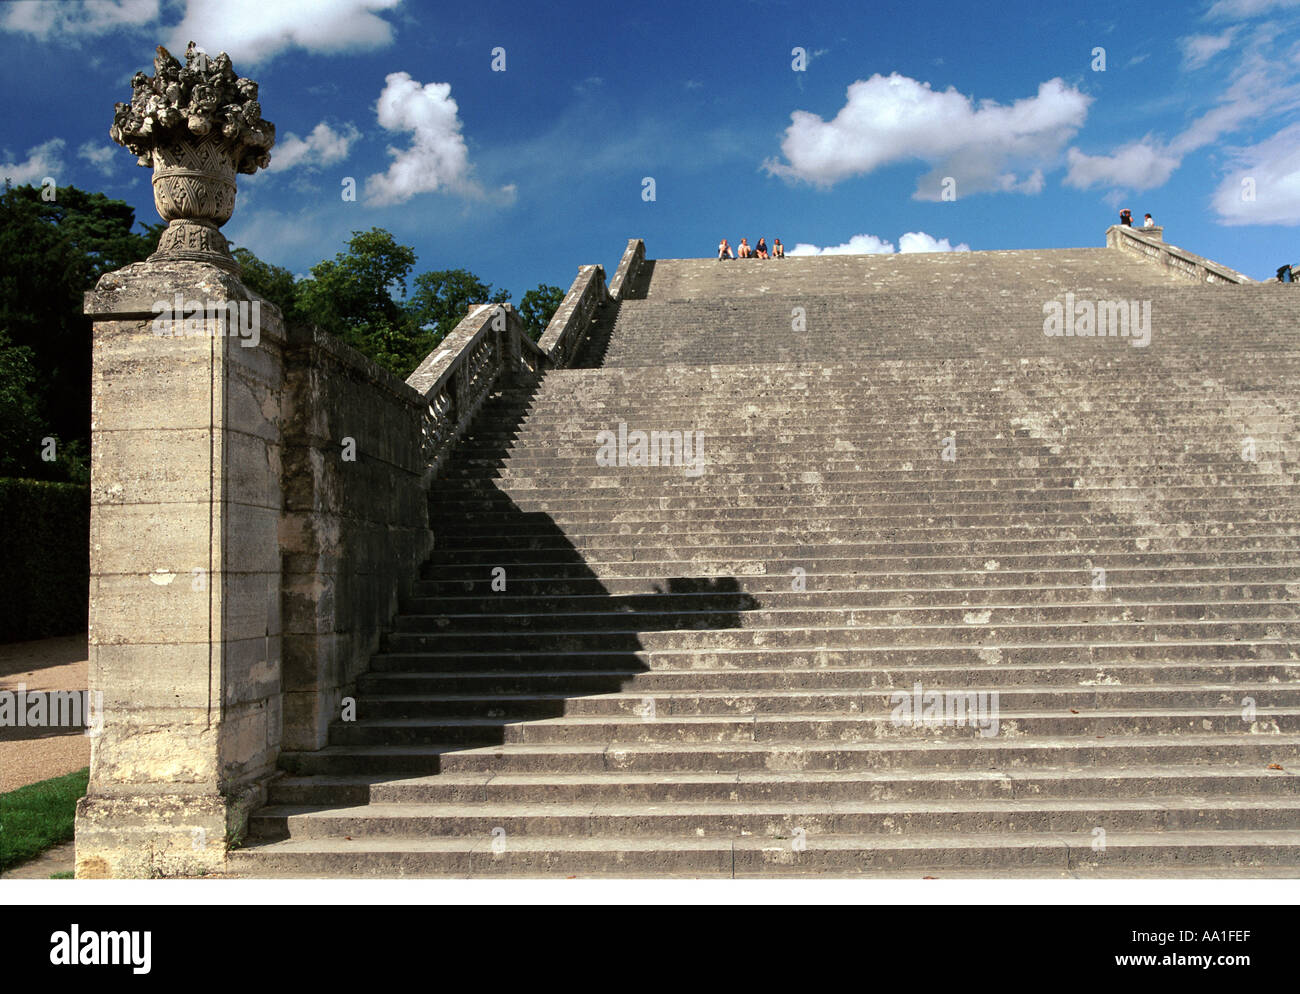 Palace of Versailles Escalier Stock Photo